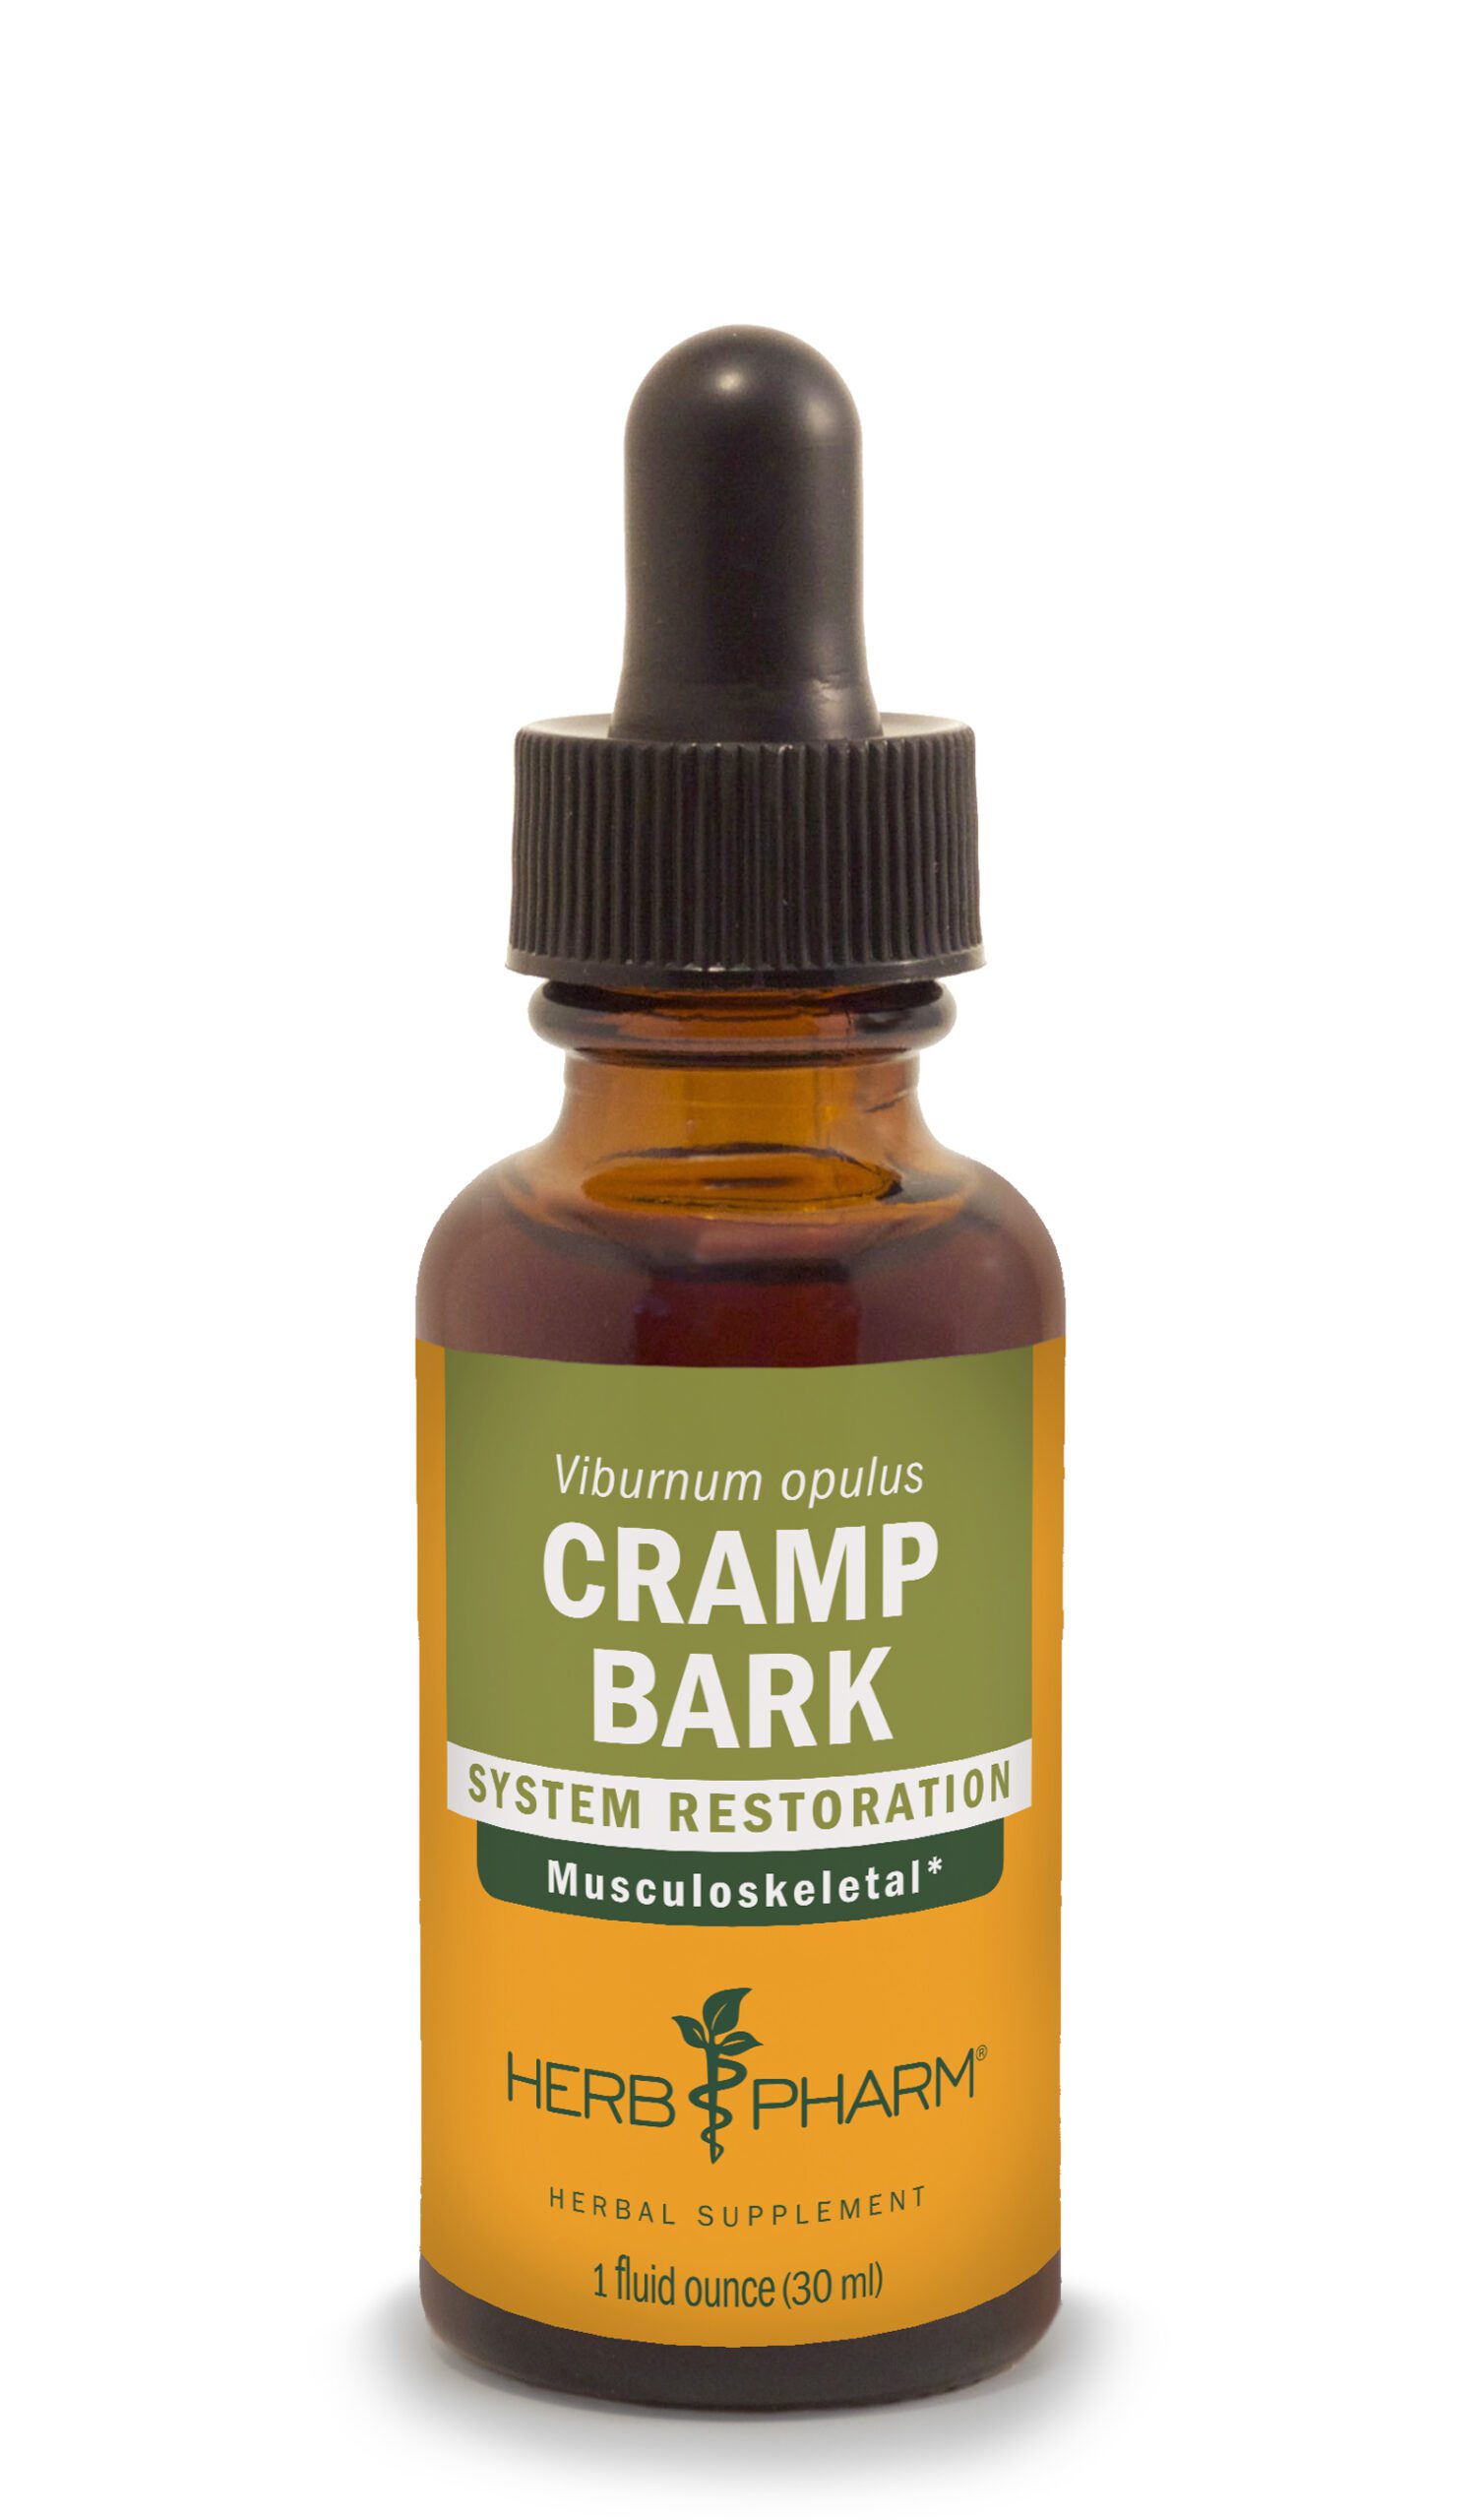 Product Listing Image for Herb Pharm Cramp Bark Tincture 1oz